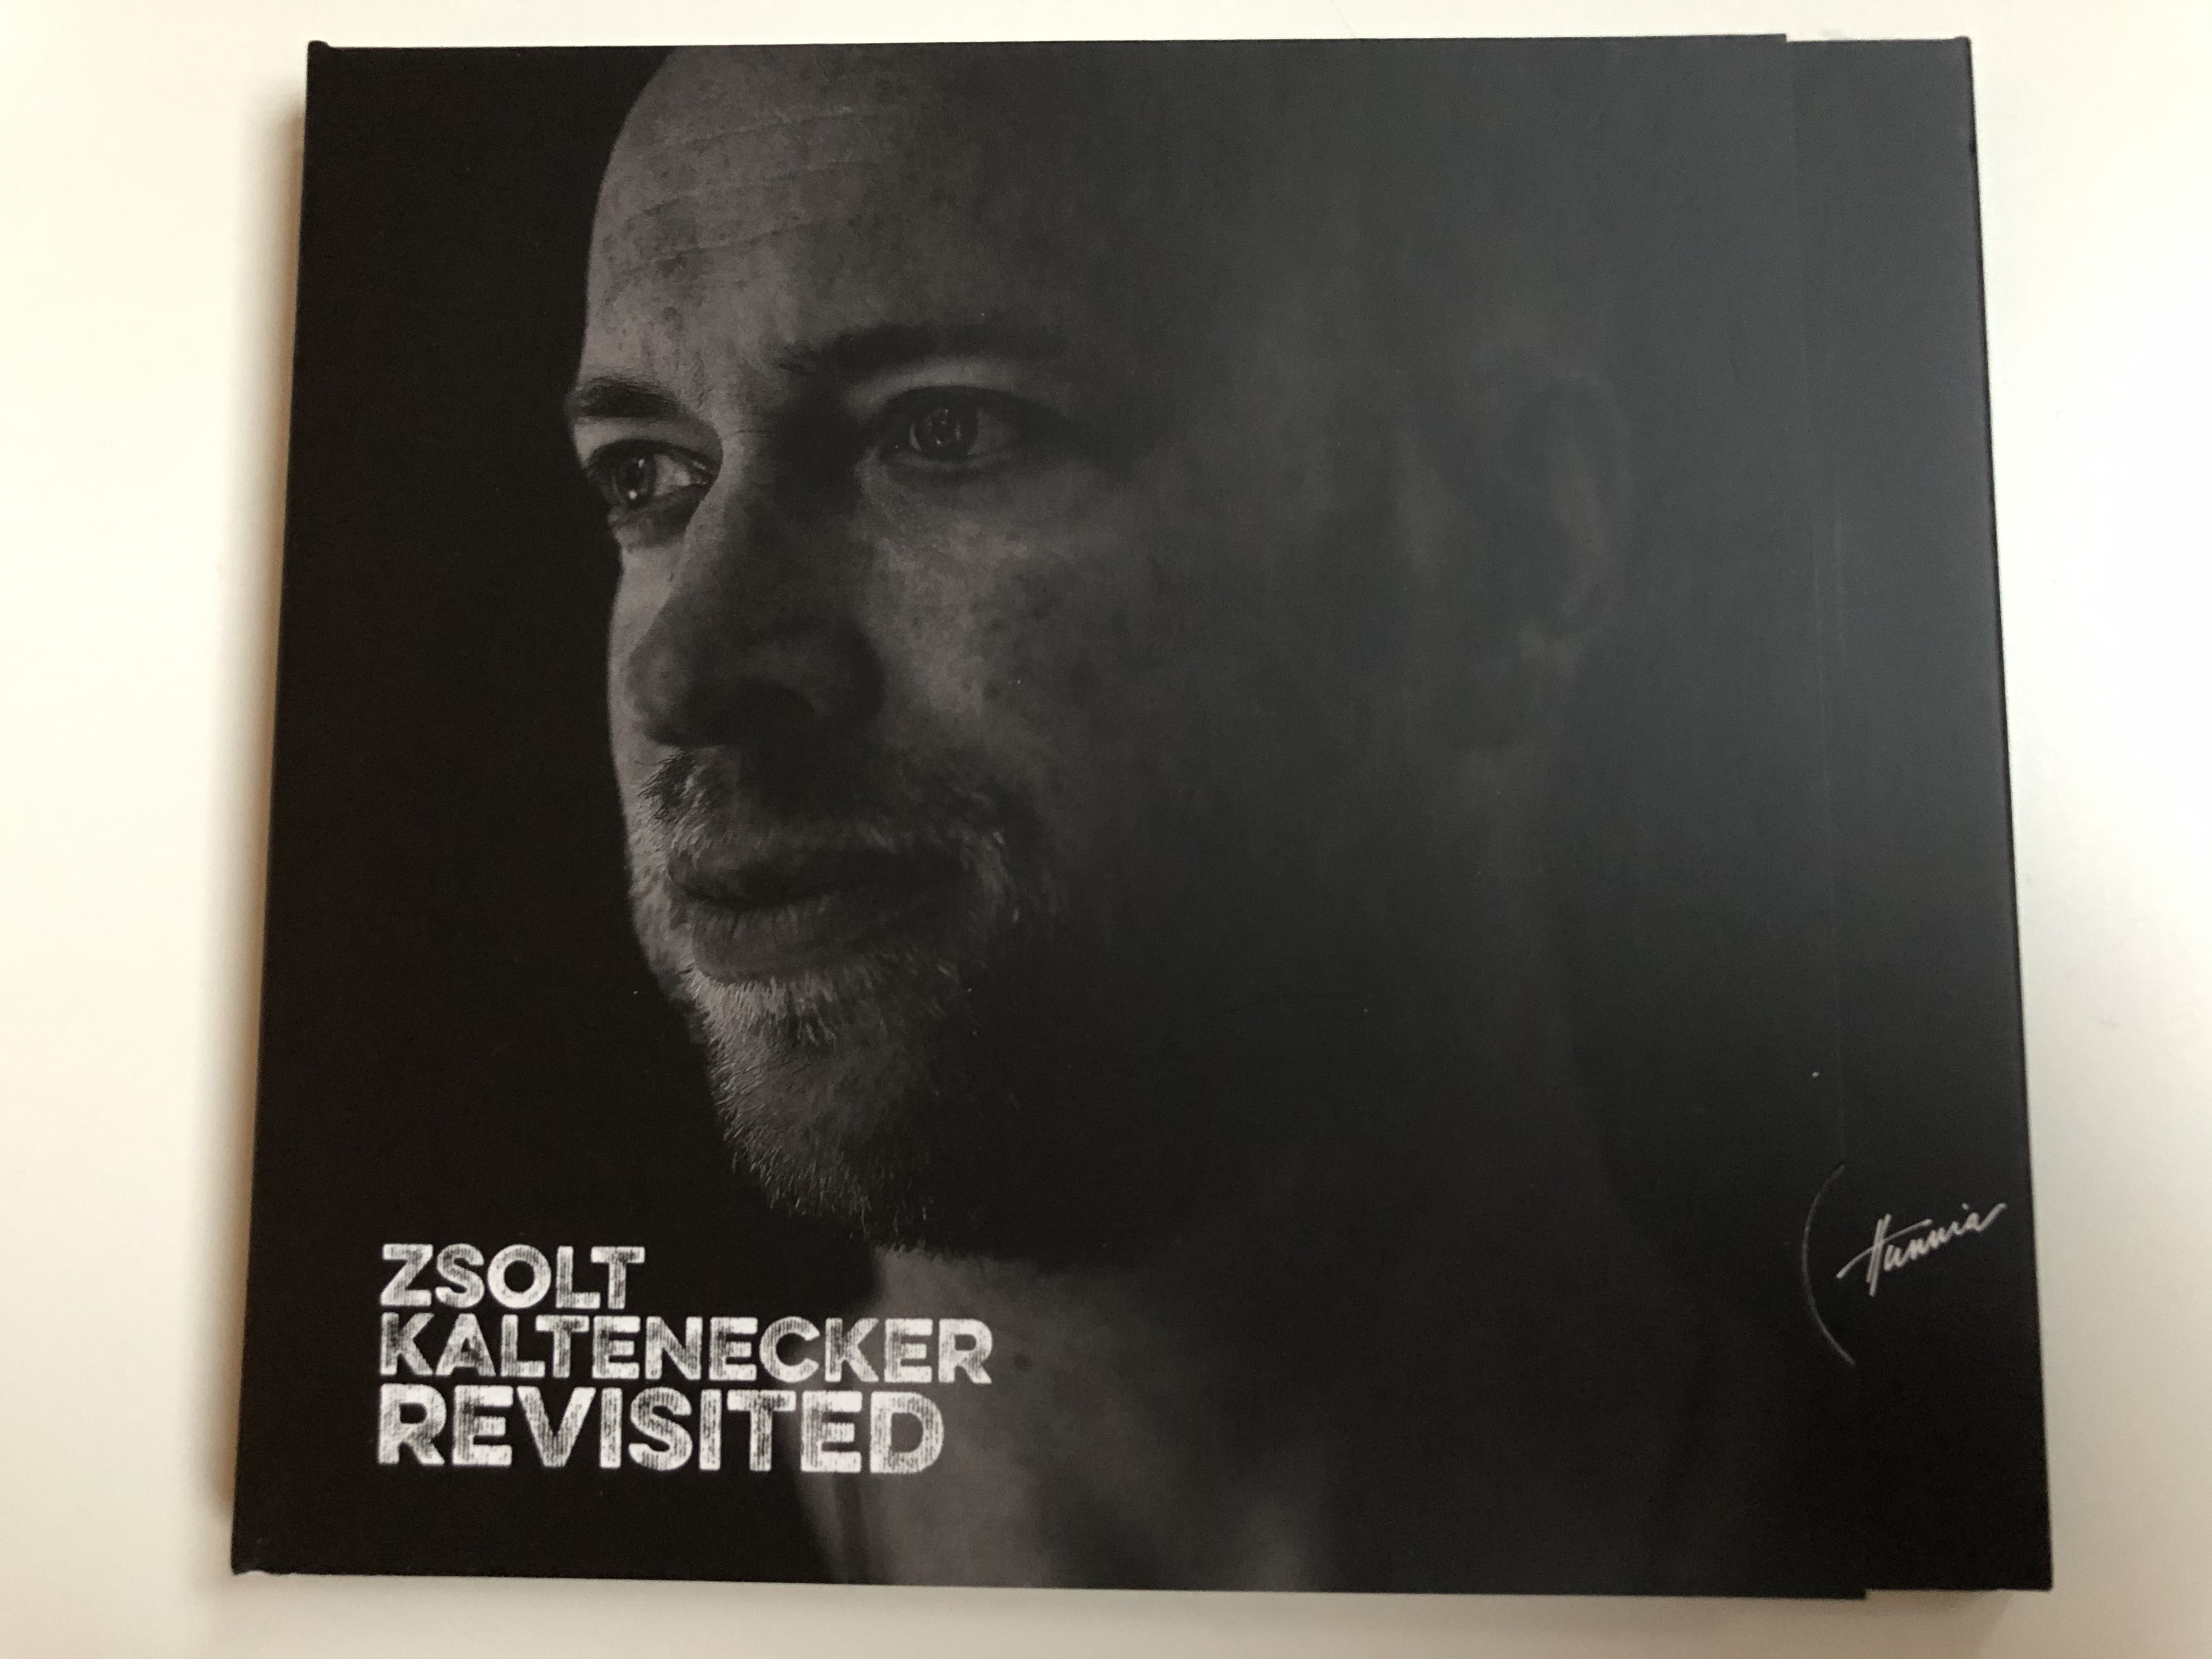 zsolt-kaltenecker-revisited-hunnia-records-film-production-audio-cd-2015-hrcd-1515-1-.jpg